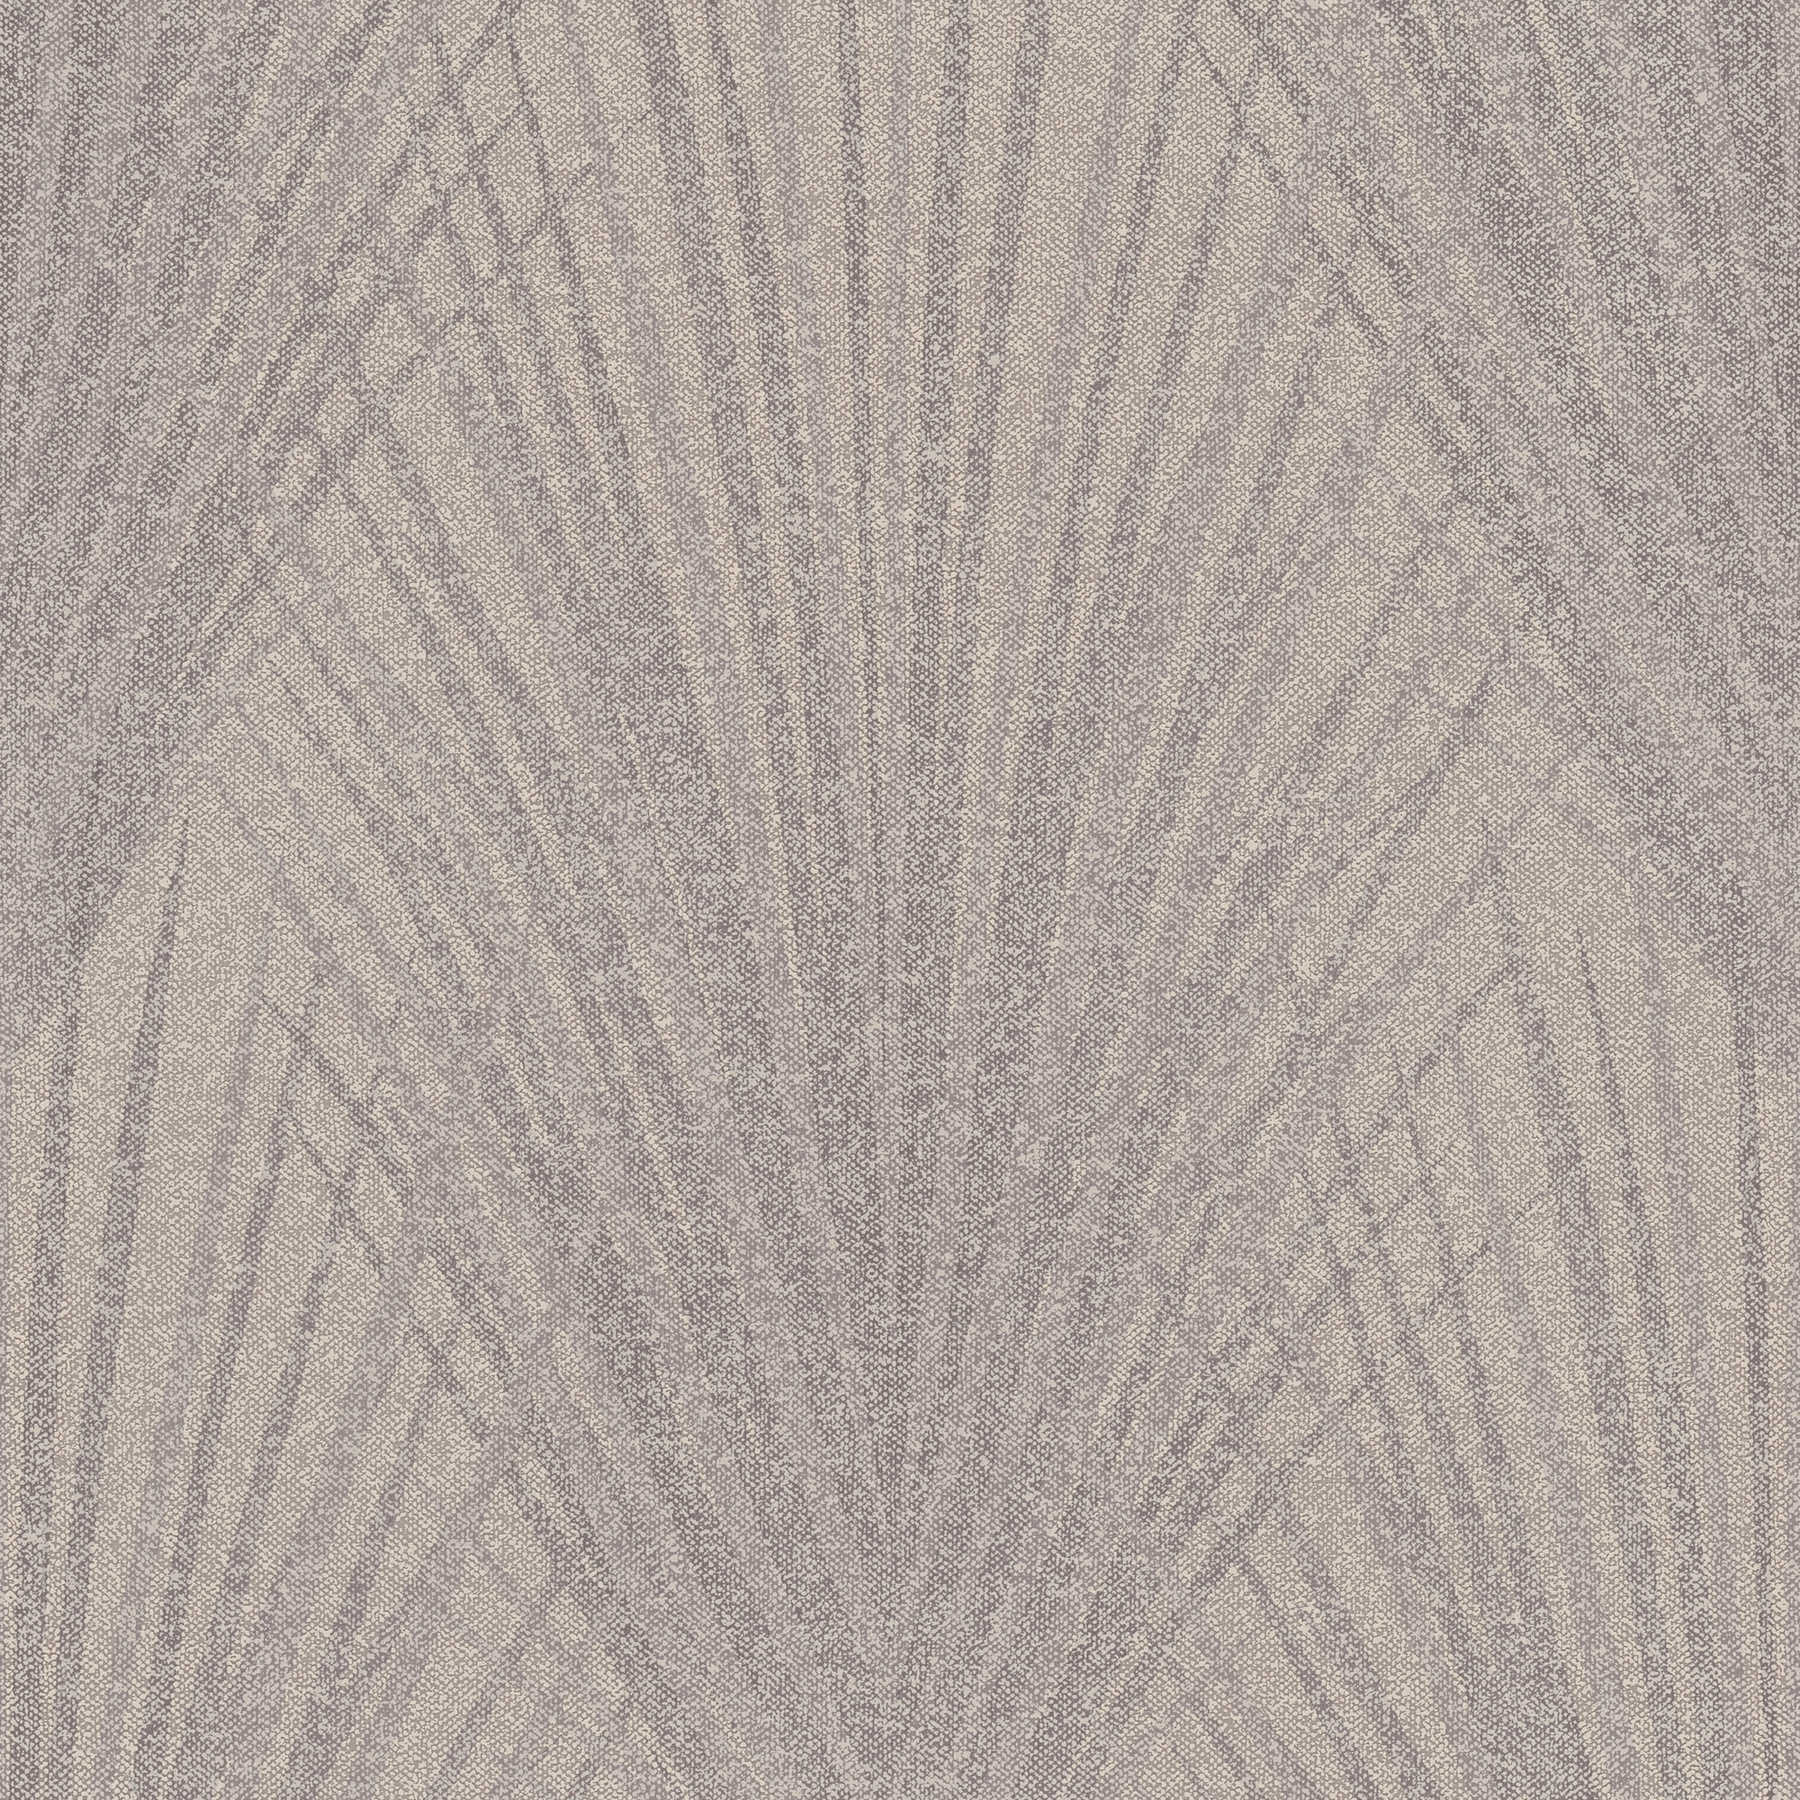 Fern leaf pattern wallpaper abstract design - brown, beige
